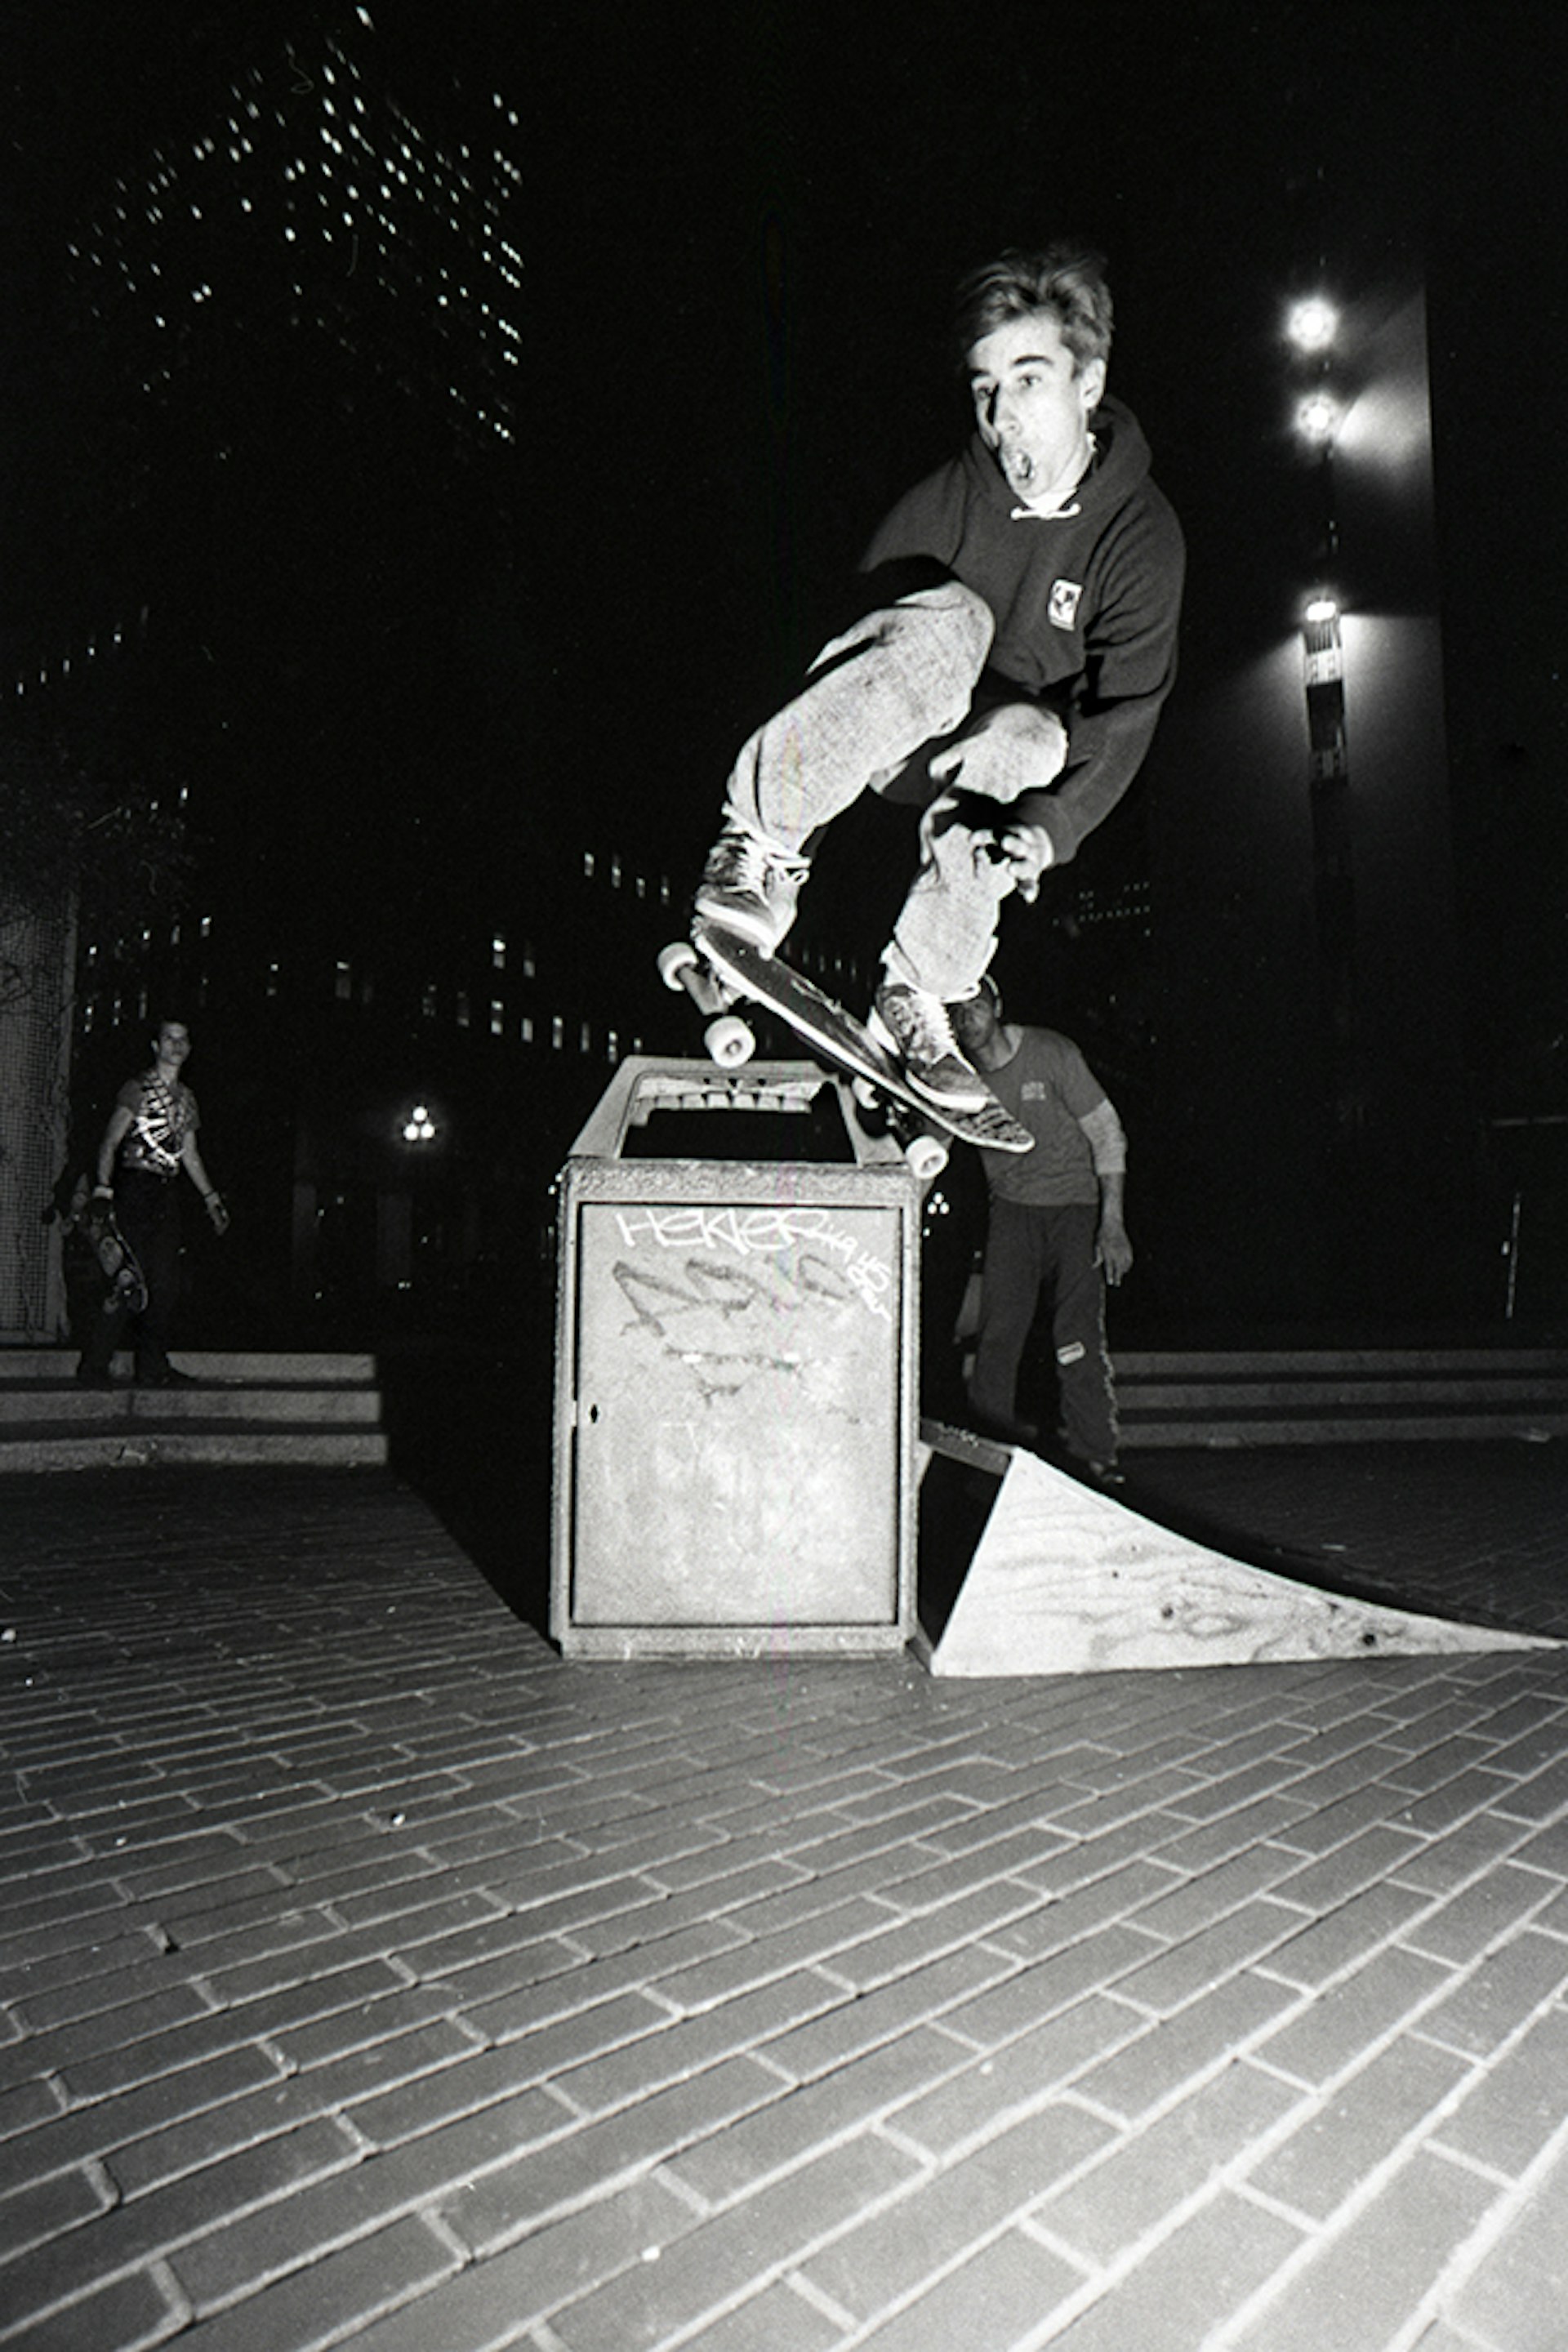 Greg Carroll at San Francisco's Embarcadero – ground zero for street skating – circa 1987. Photo by Gus Duarte. 